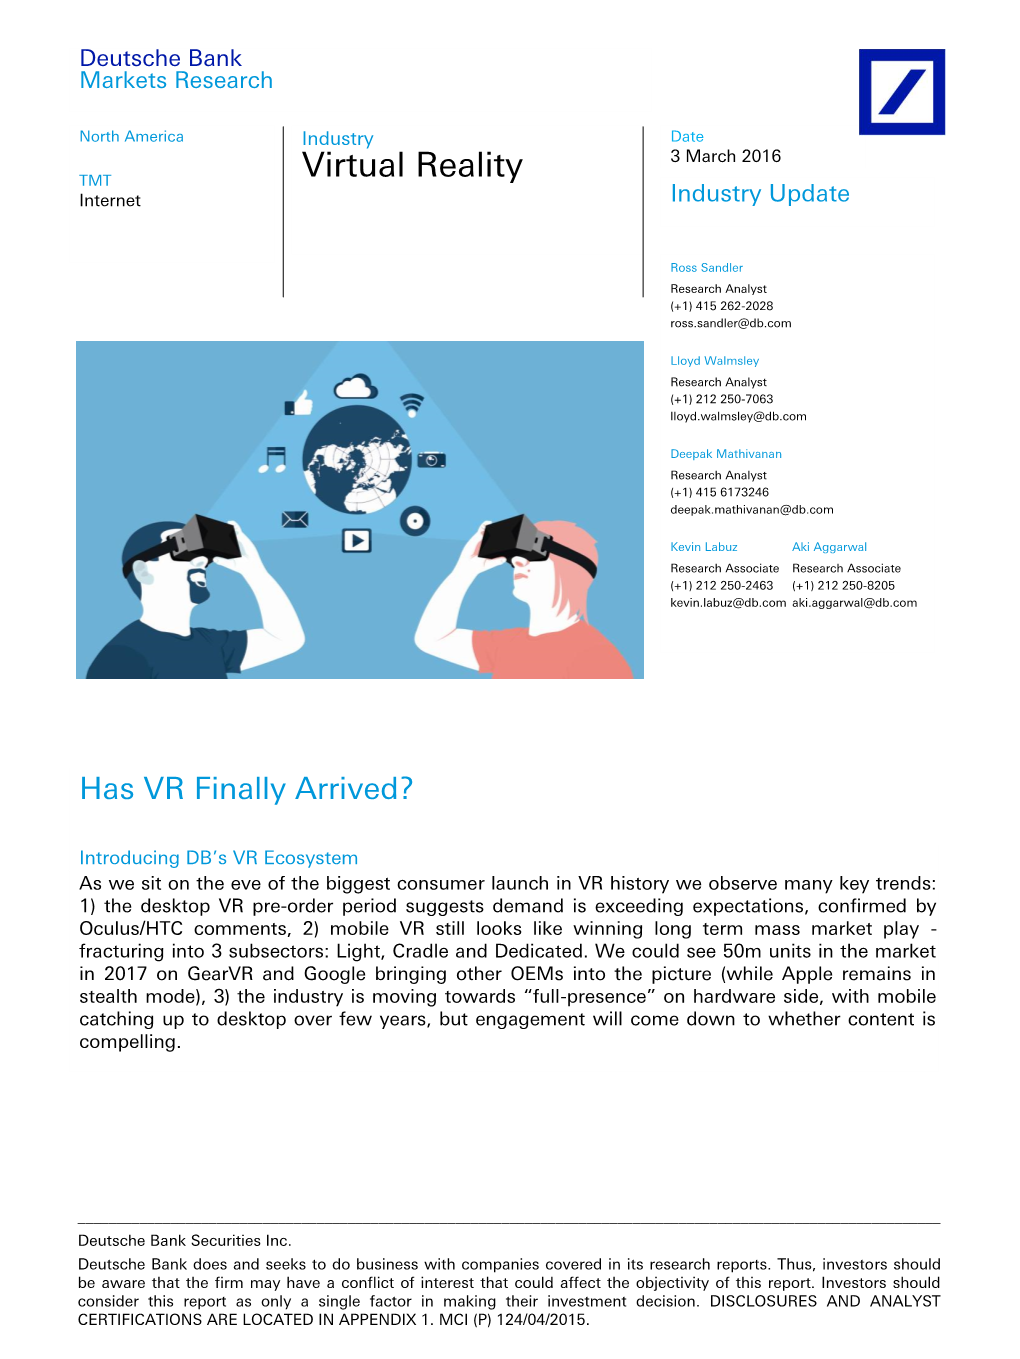 Virtual Reality Internet Industry Update